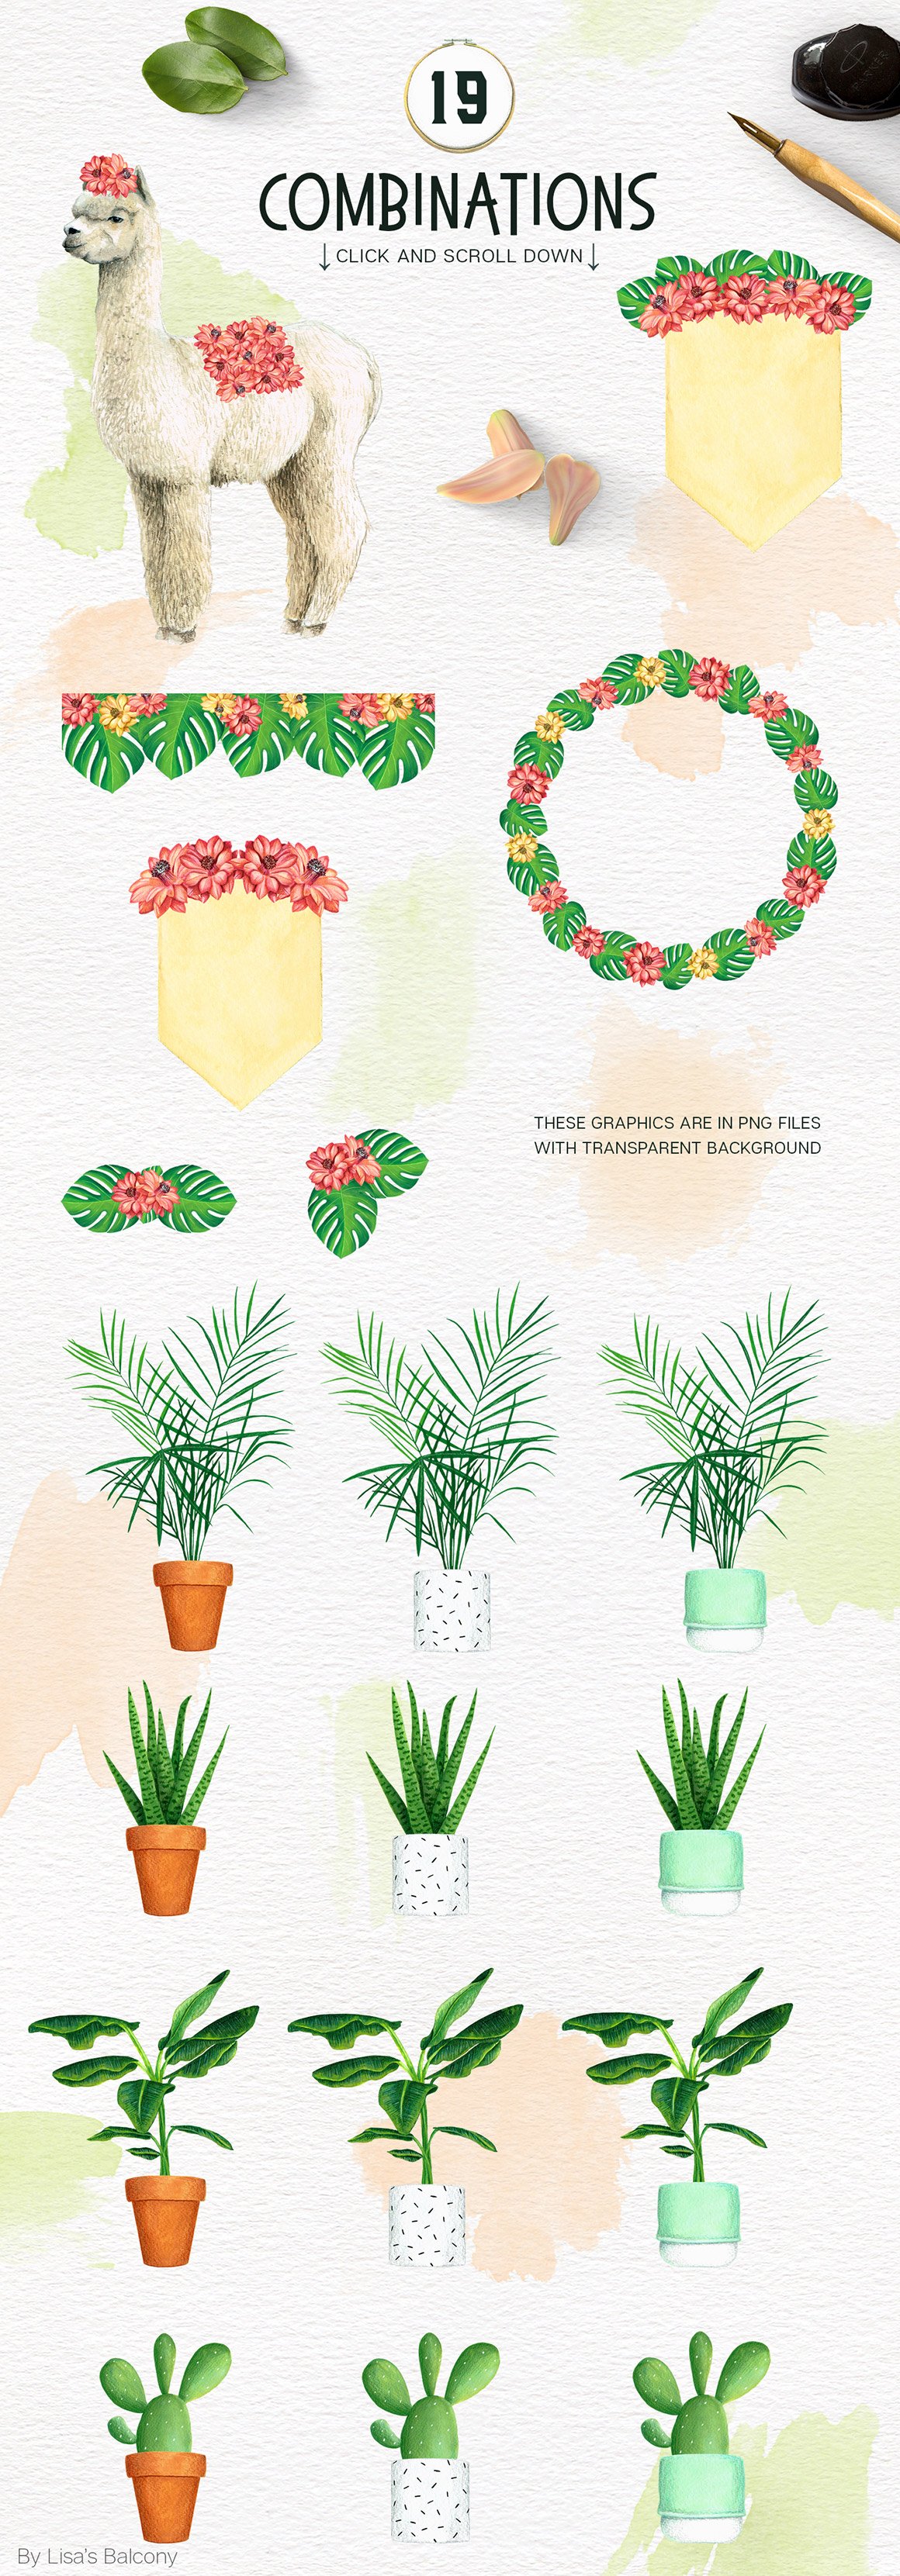 Cacti and Animals - Design Kit